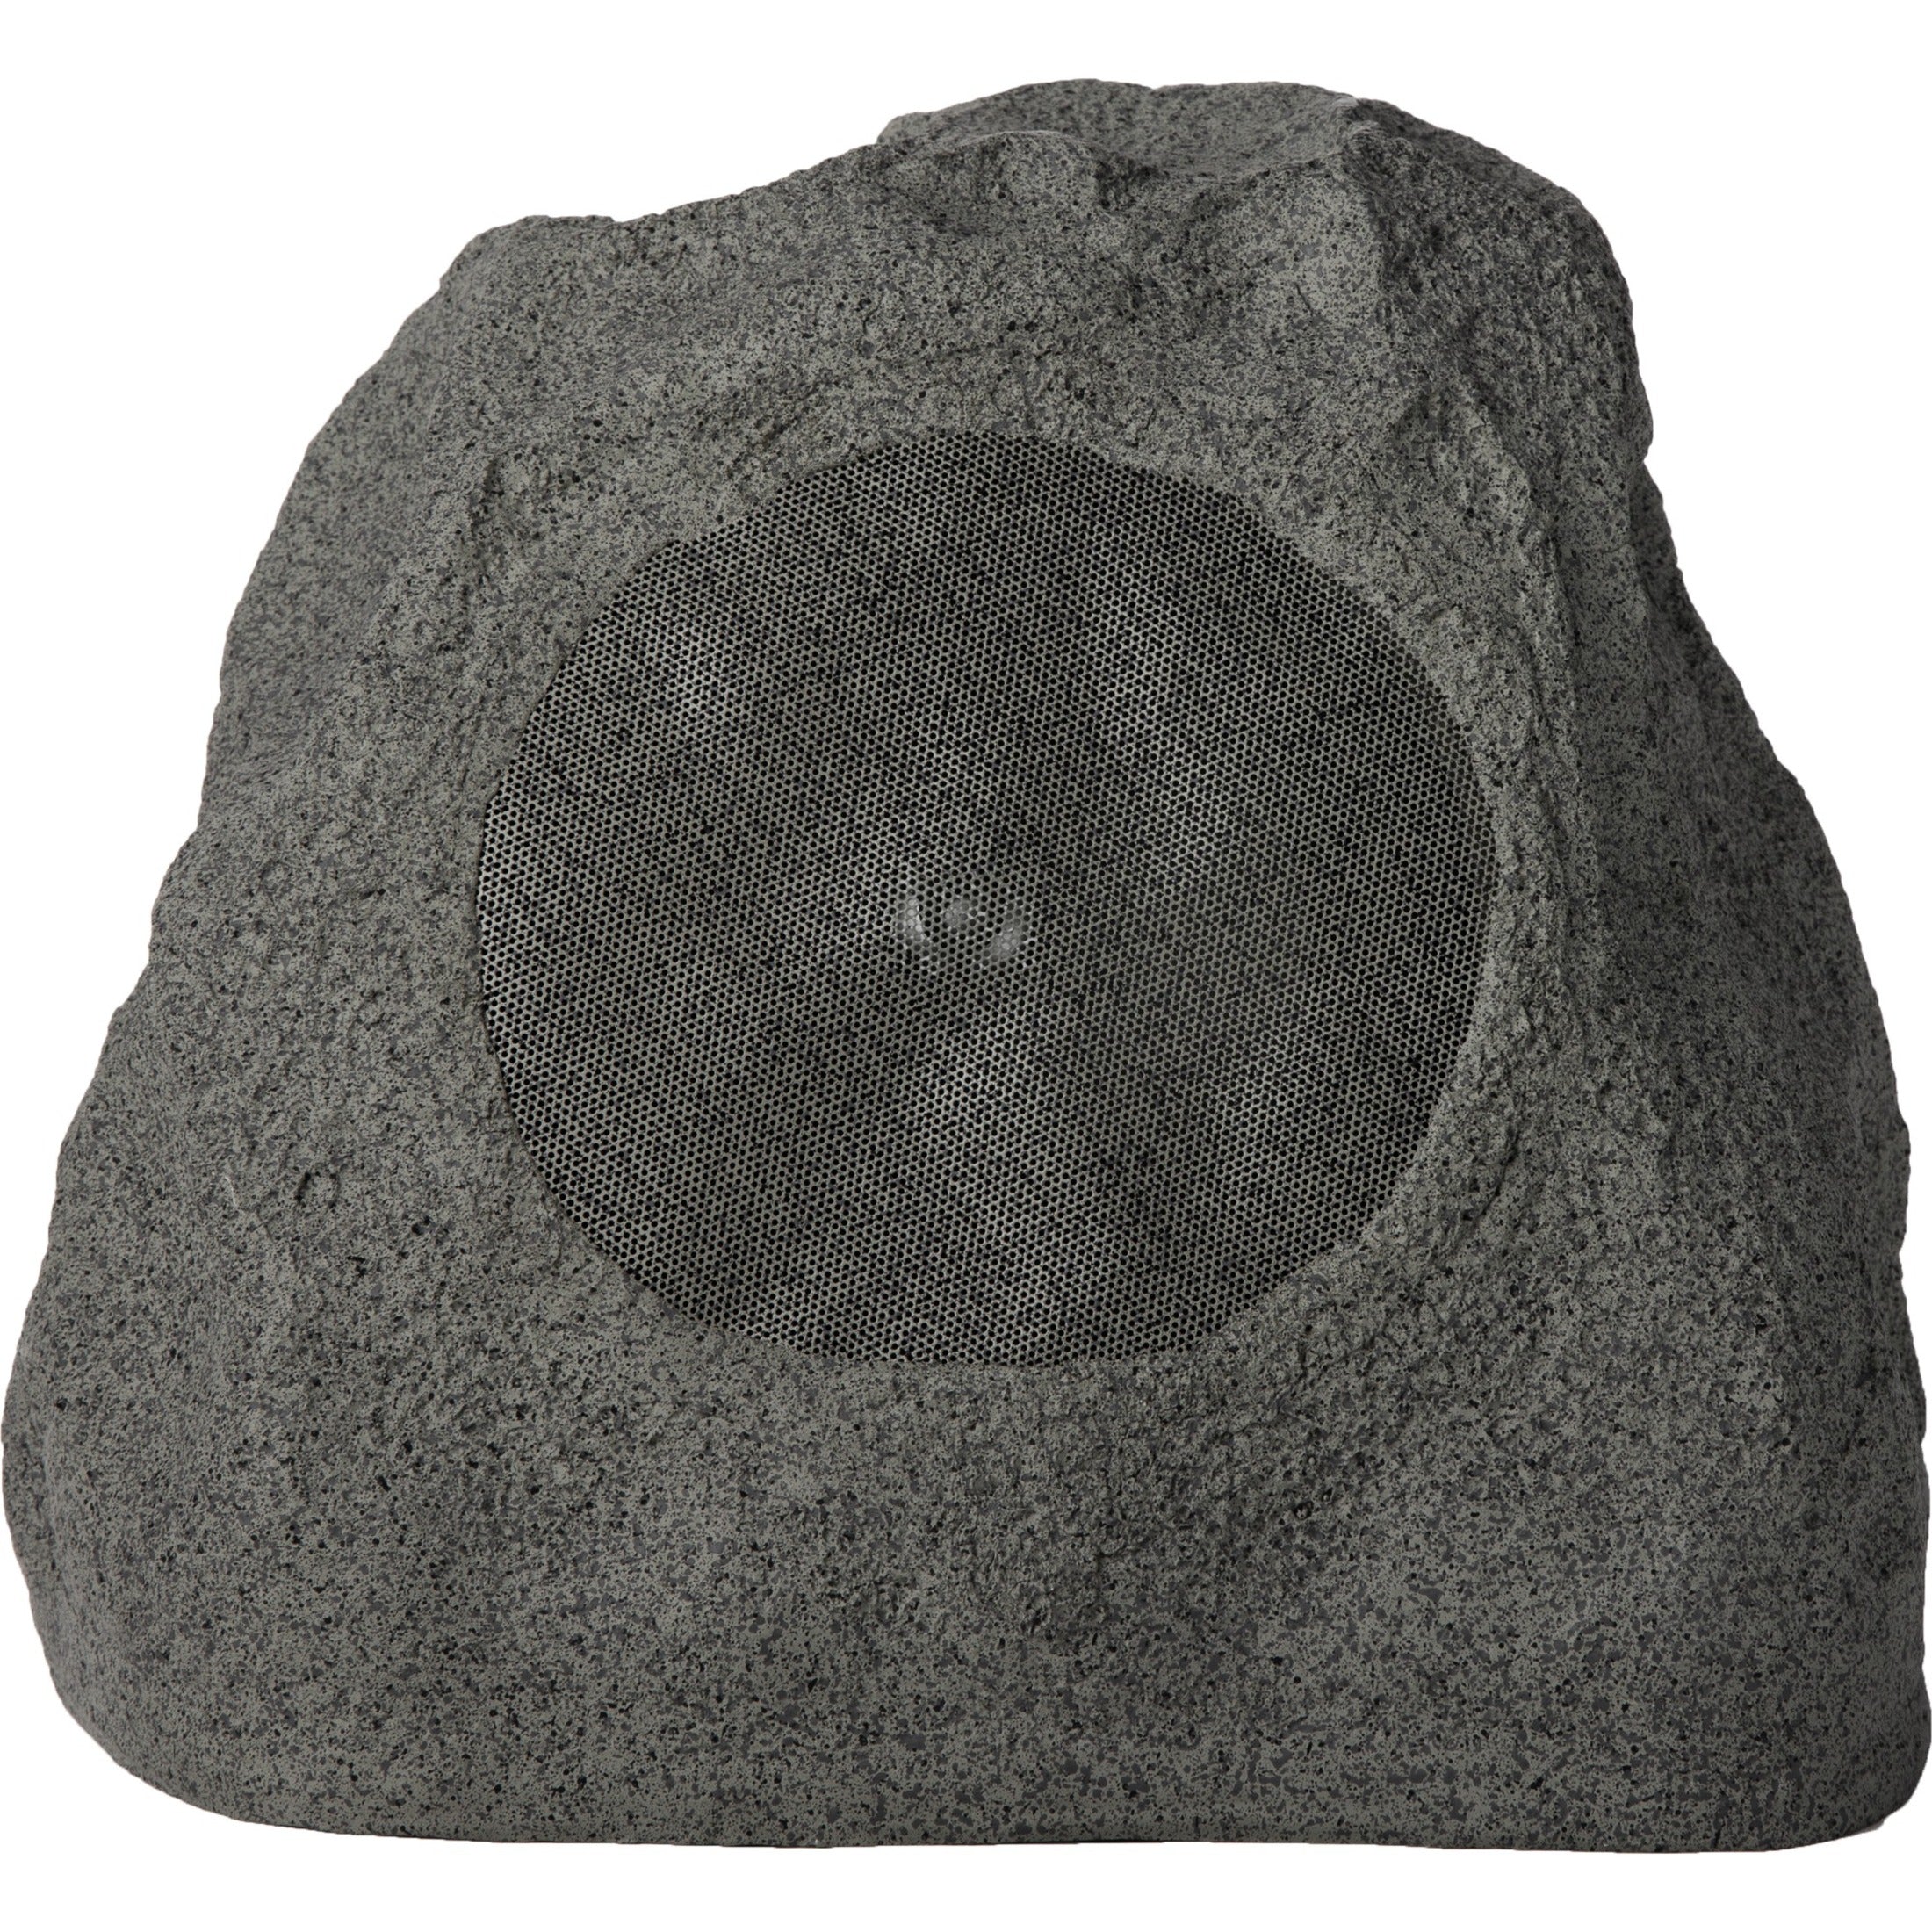 Russound 5R82MK2-W 8 OutBack Rock Speaker, Weathered Granite, 2-Way, 125W, Outdoor